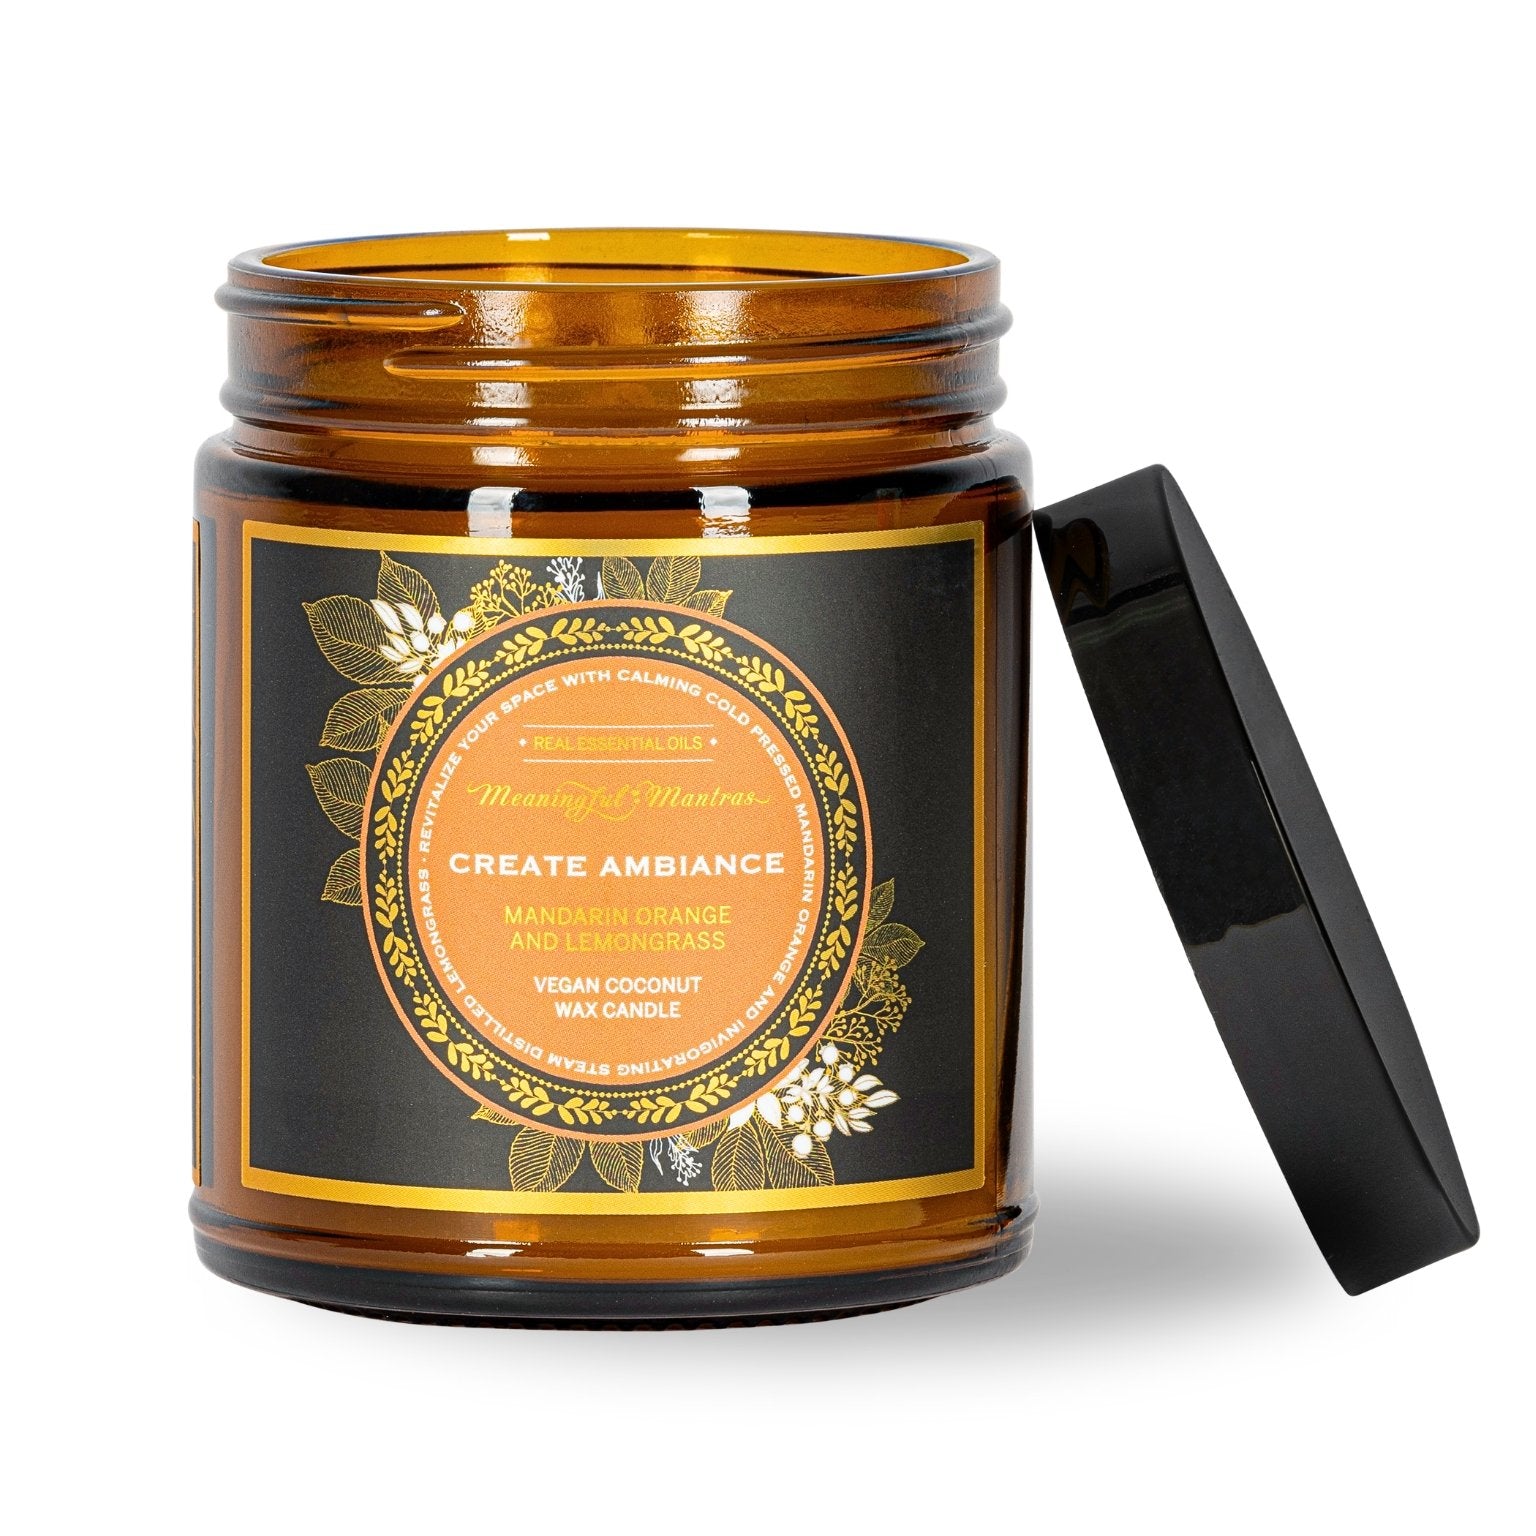 Create Ambiance Mandarin Orange & Lemongrass Candle